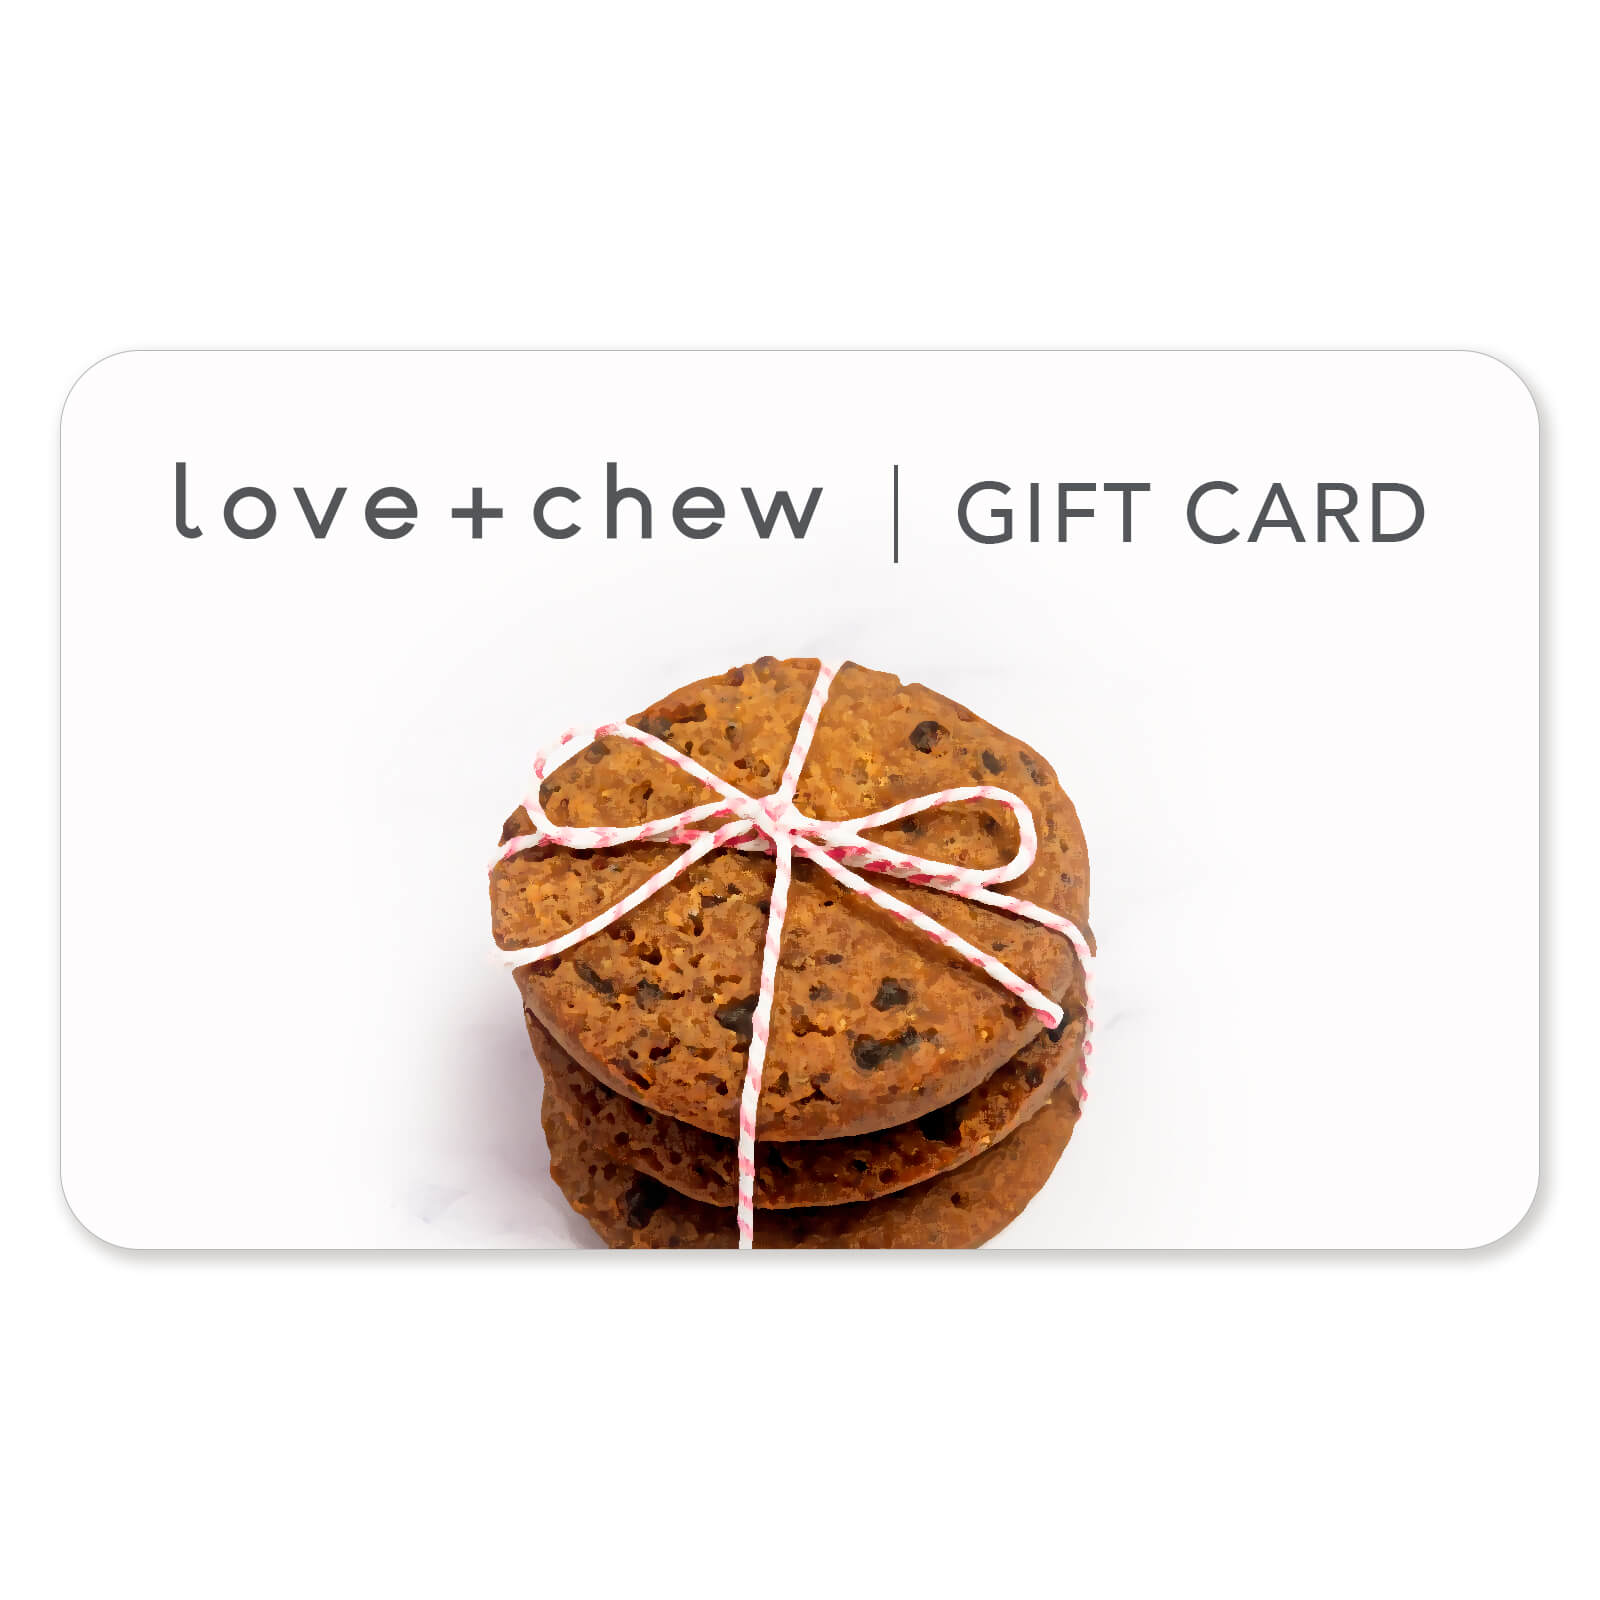 LOVE + CHEW GIFT CARD